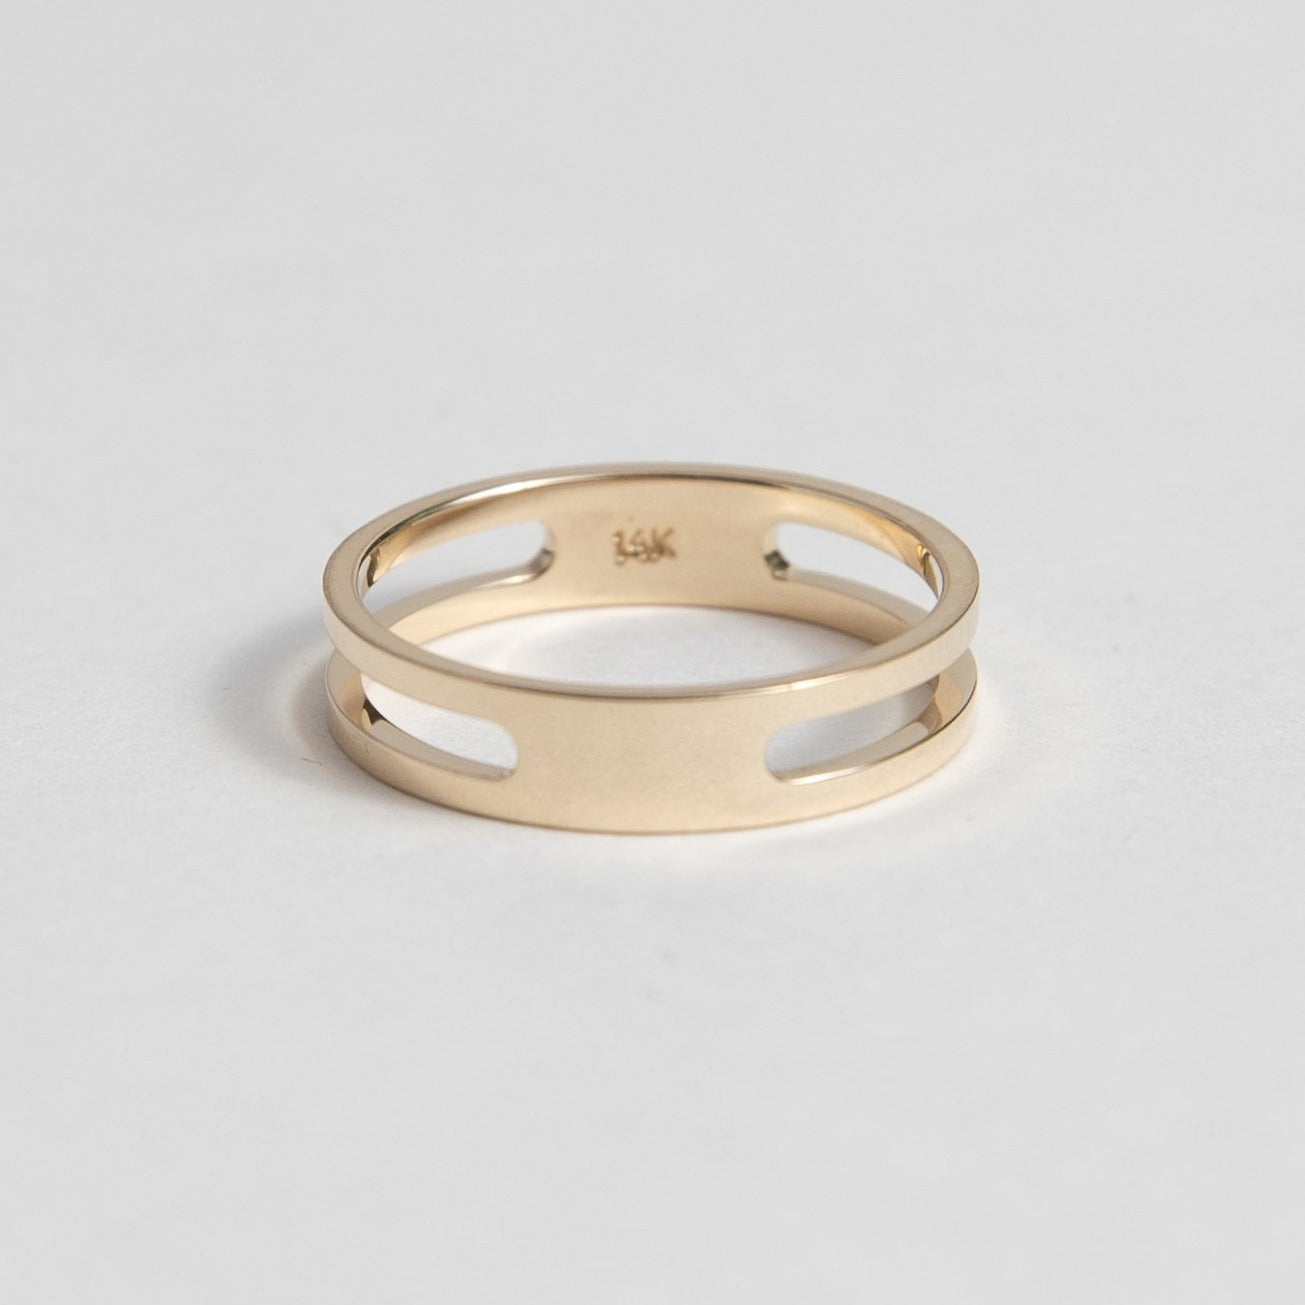 Mesu Designer Ring in 14 karat yellow gold by SHW Fine Jewelry NYC